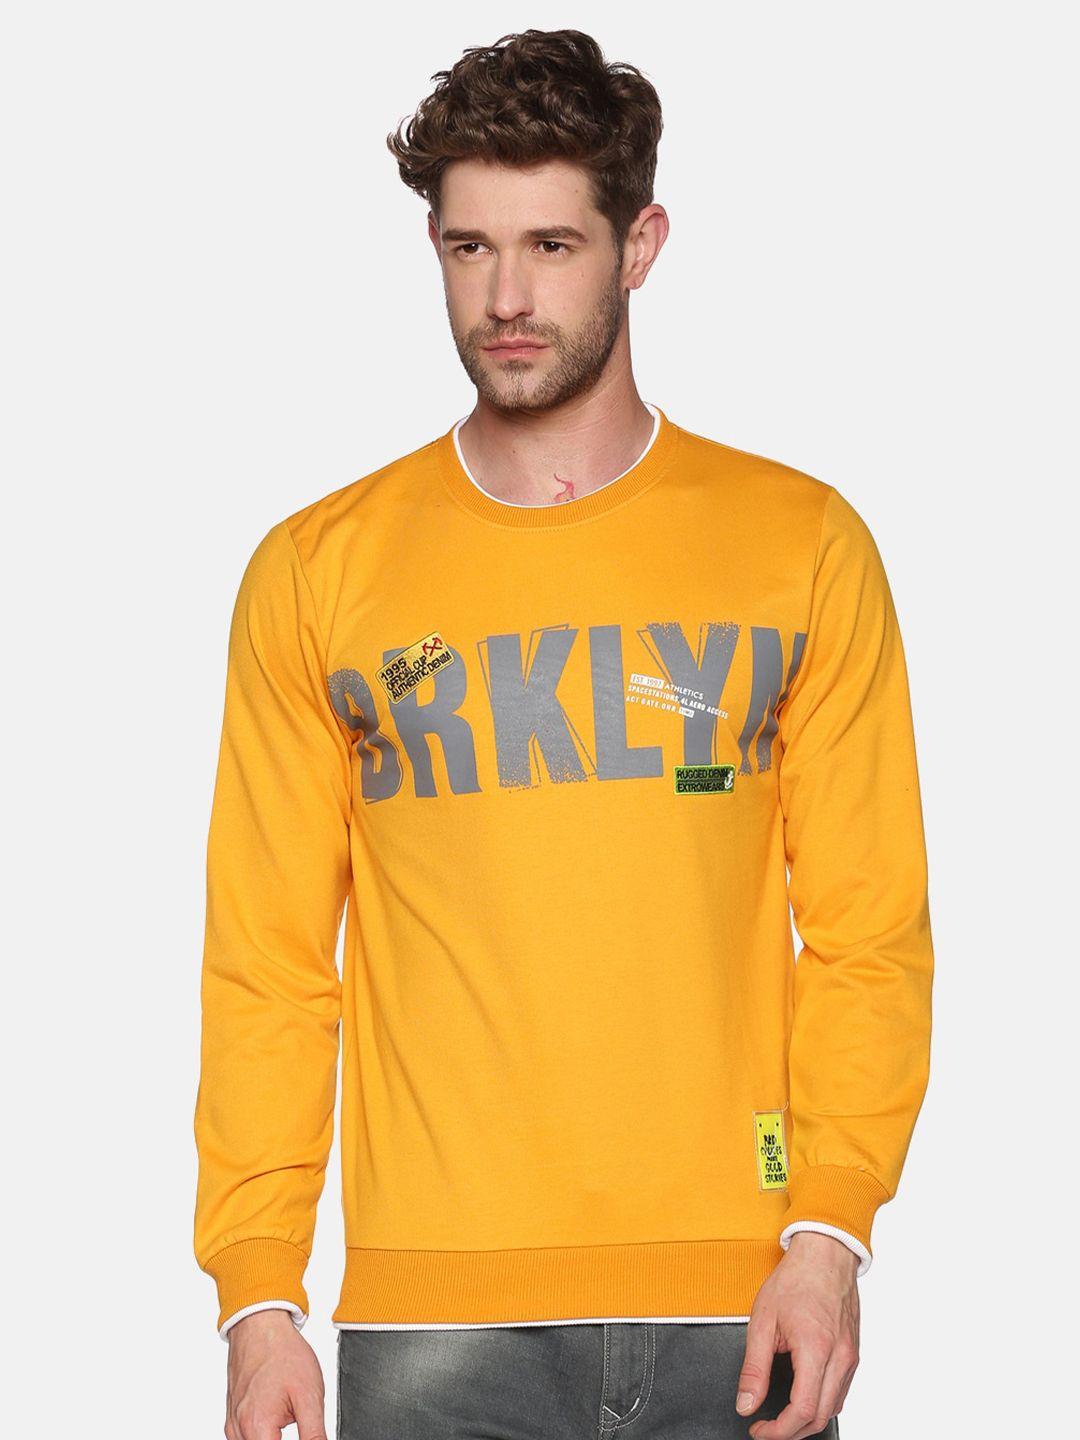 showoff-men-yellow-printed-sweatshirt